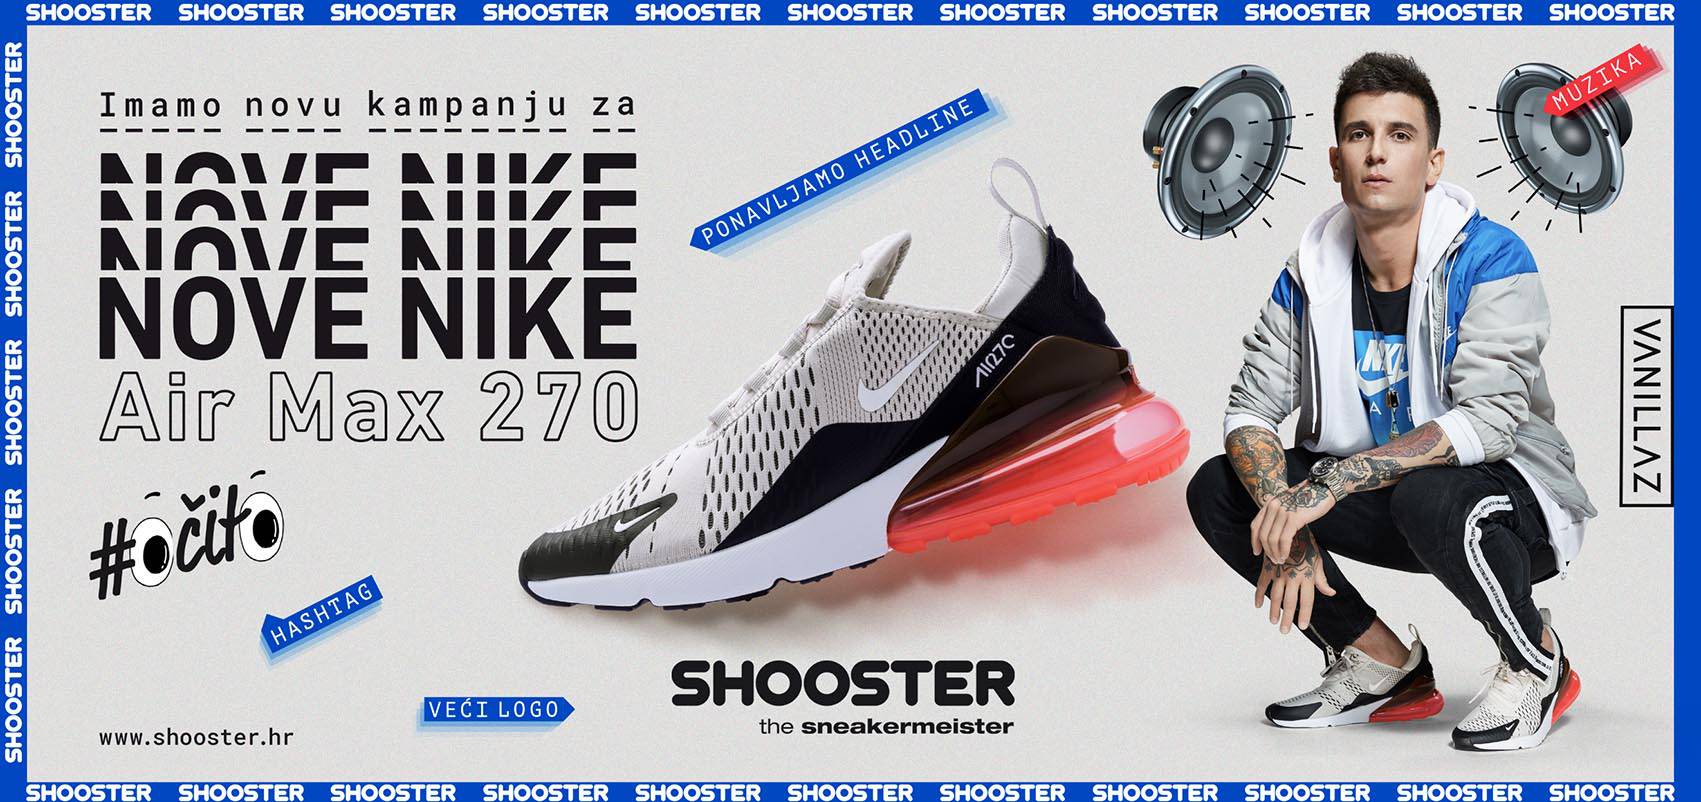 Očito imamo kampanju za nove Nike Air Max 270